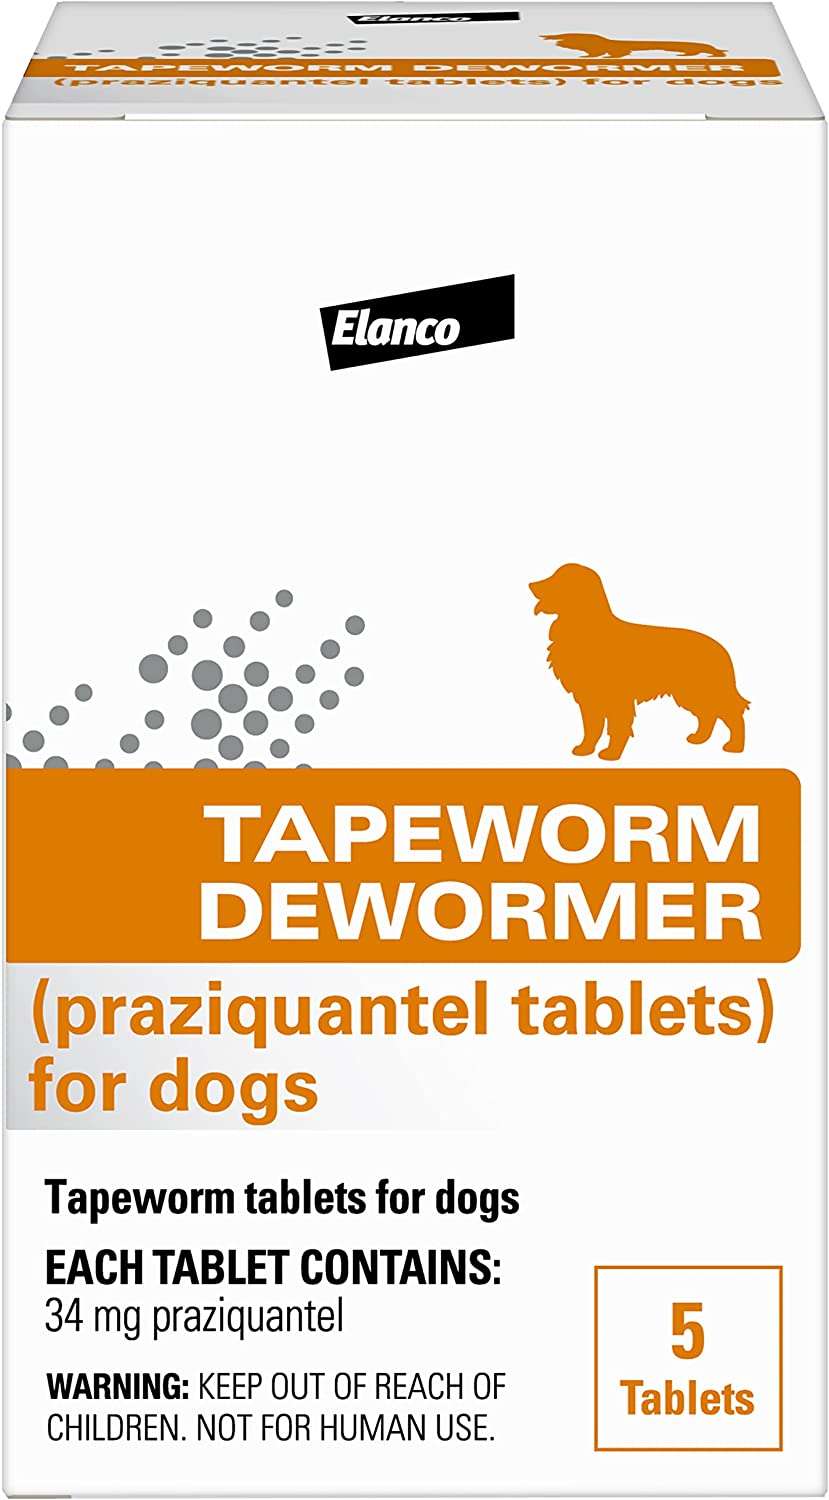 Tapeworm dewormer